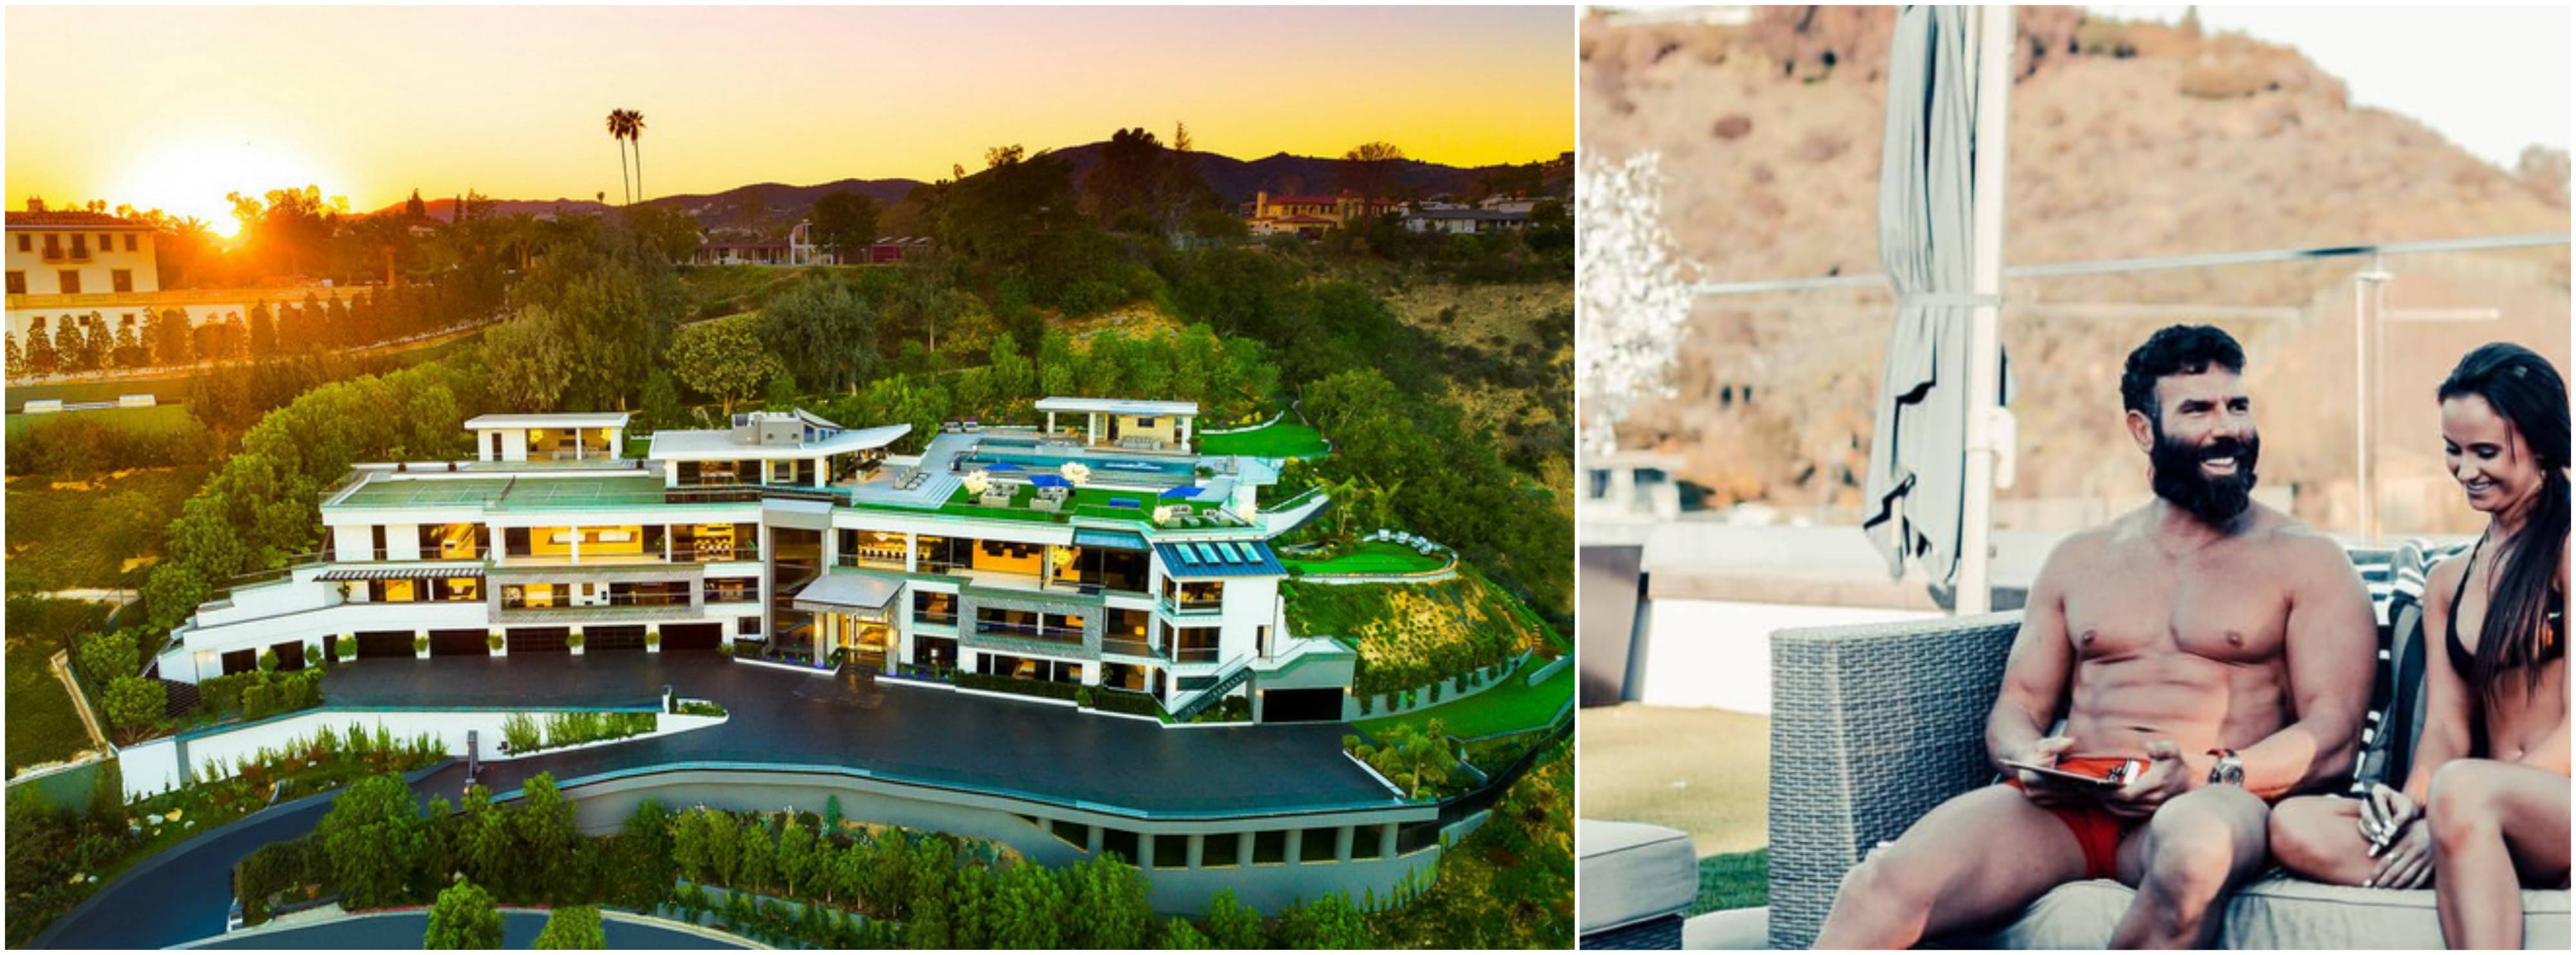 Dan Bilzerian mansion Bel Air Los Angeles 100 millioner